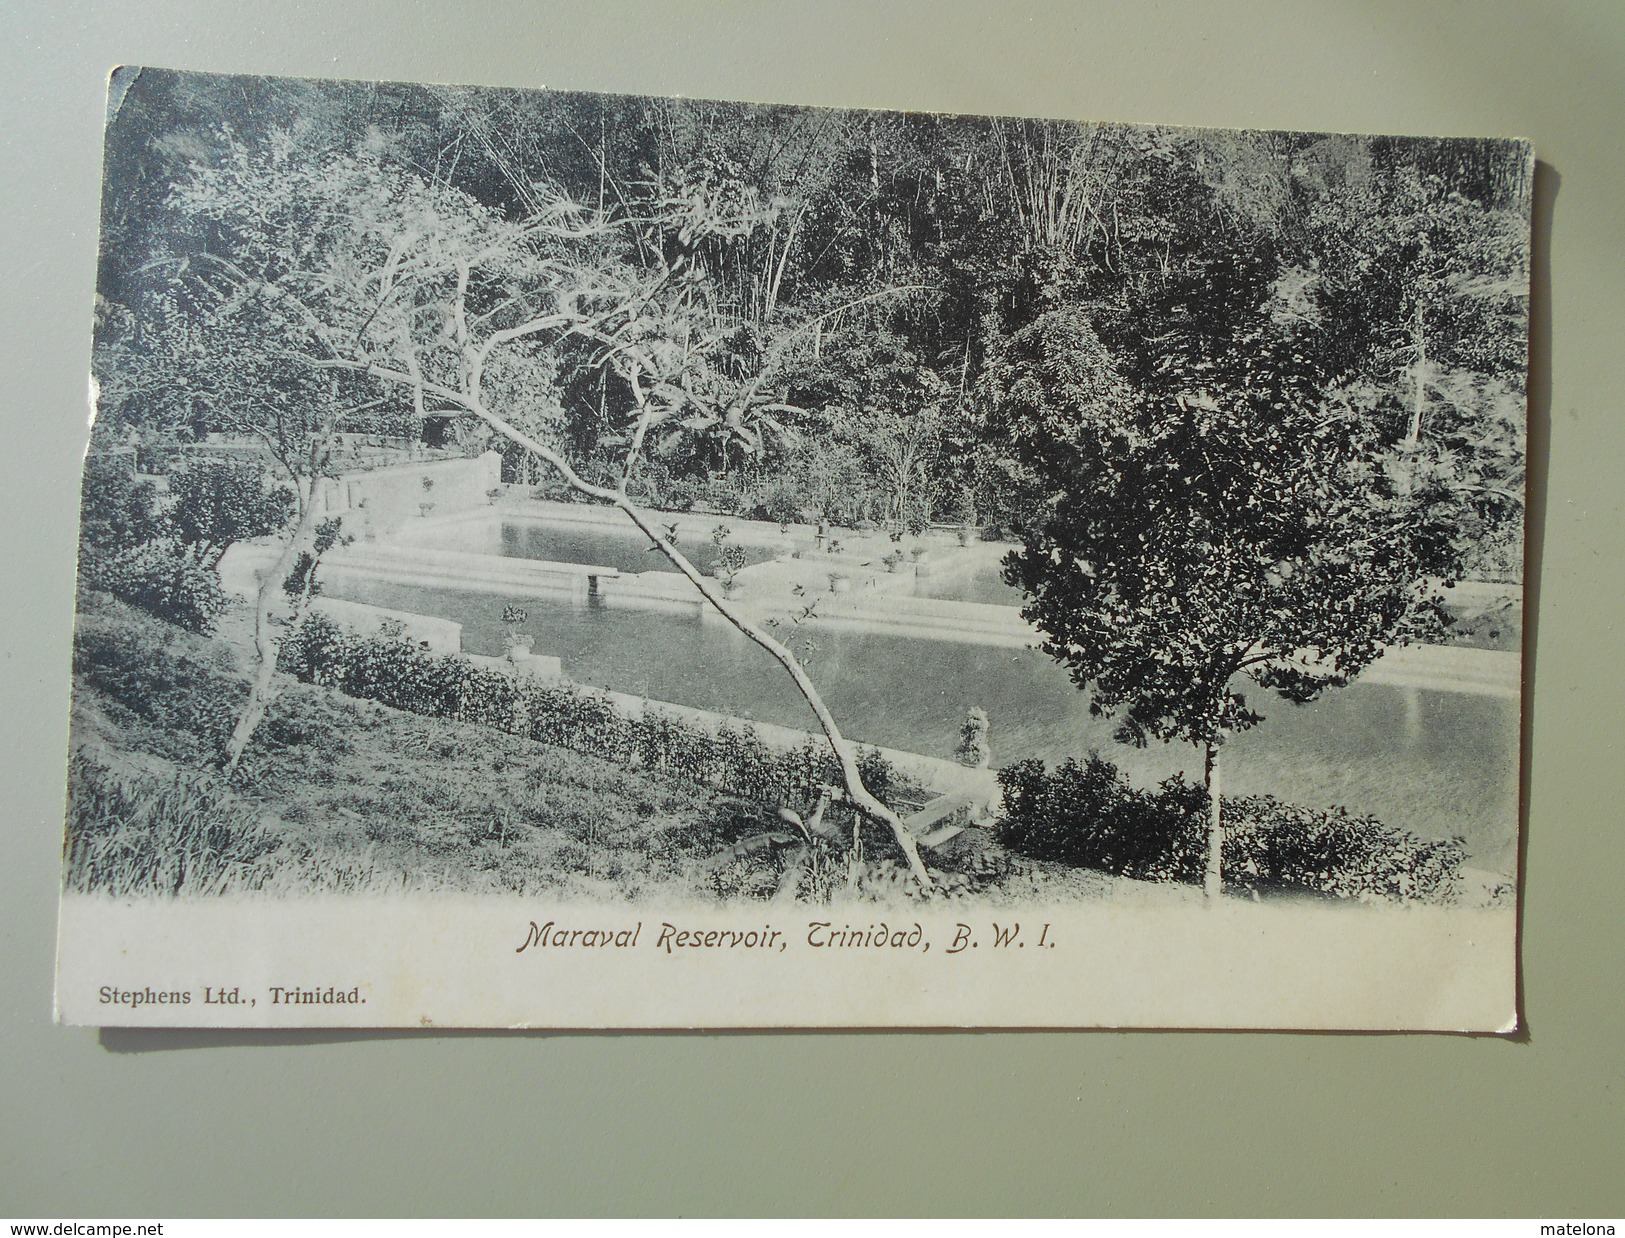 ANTILLES TRINIDAD B. W. I. MARAVAL RESERVOIR - Trinidad